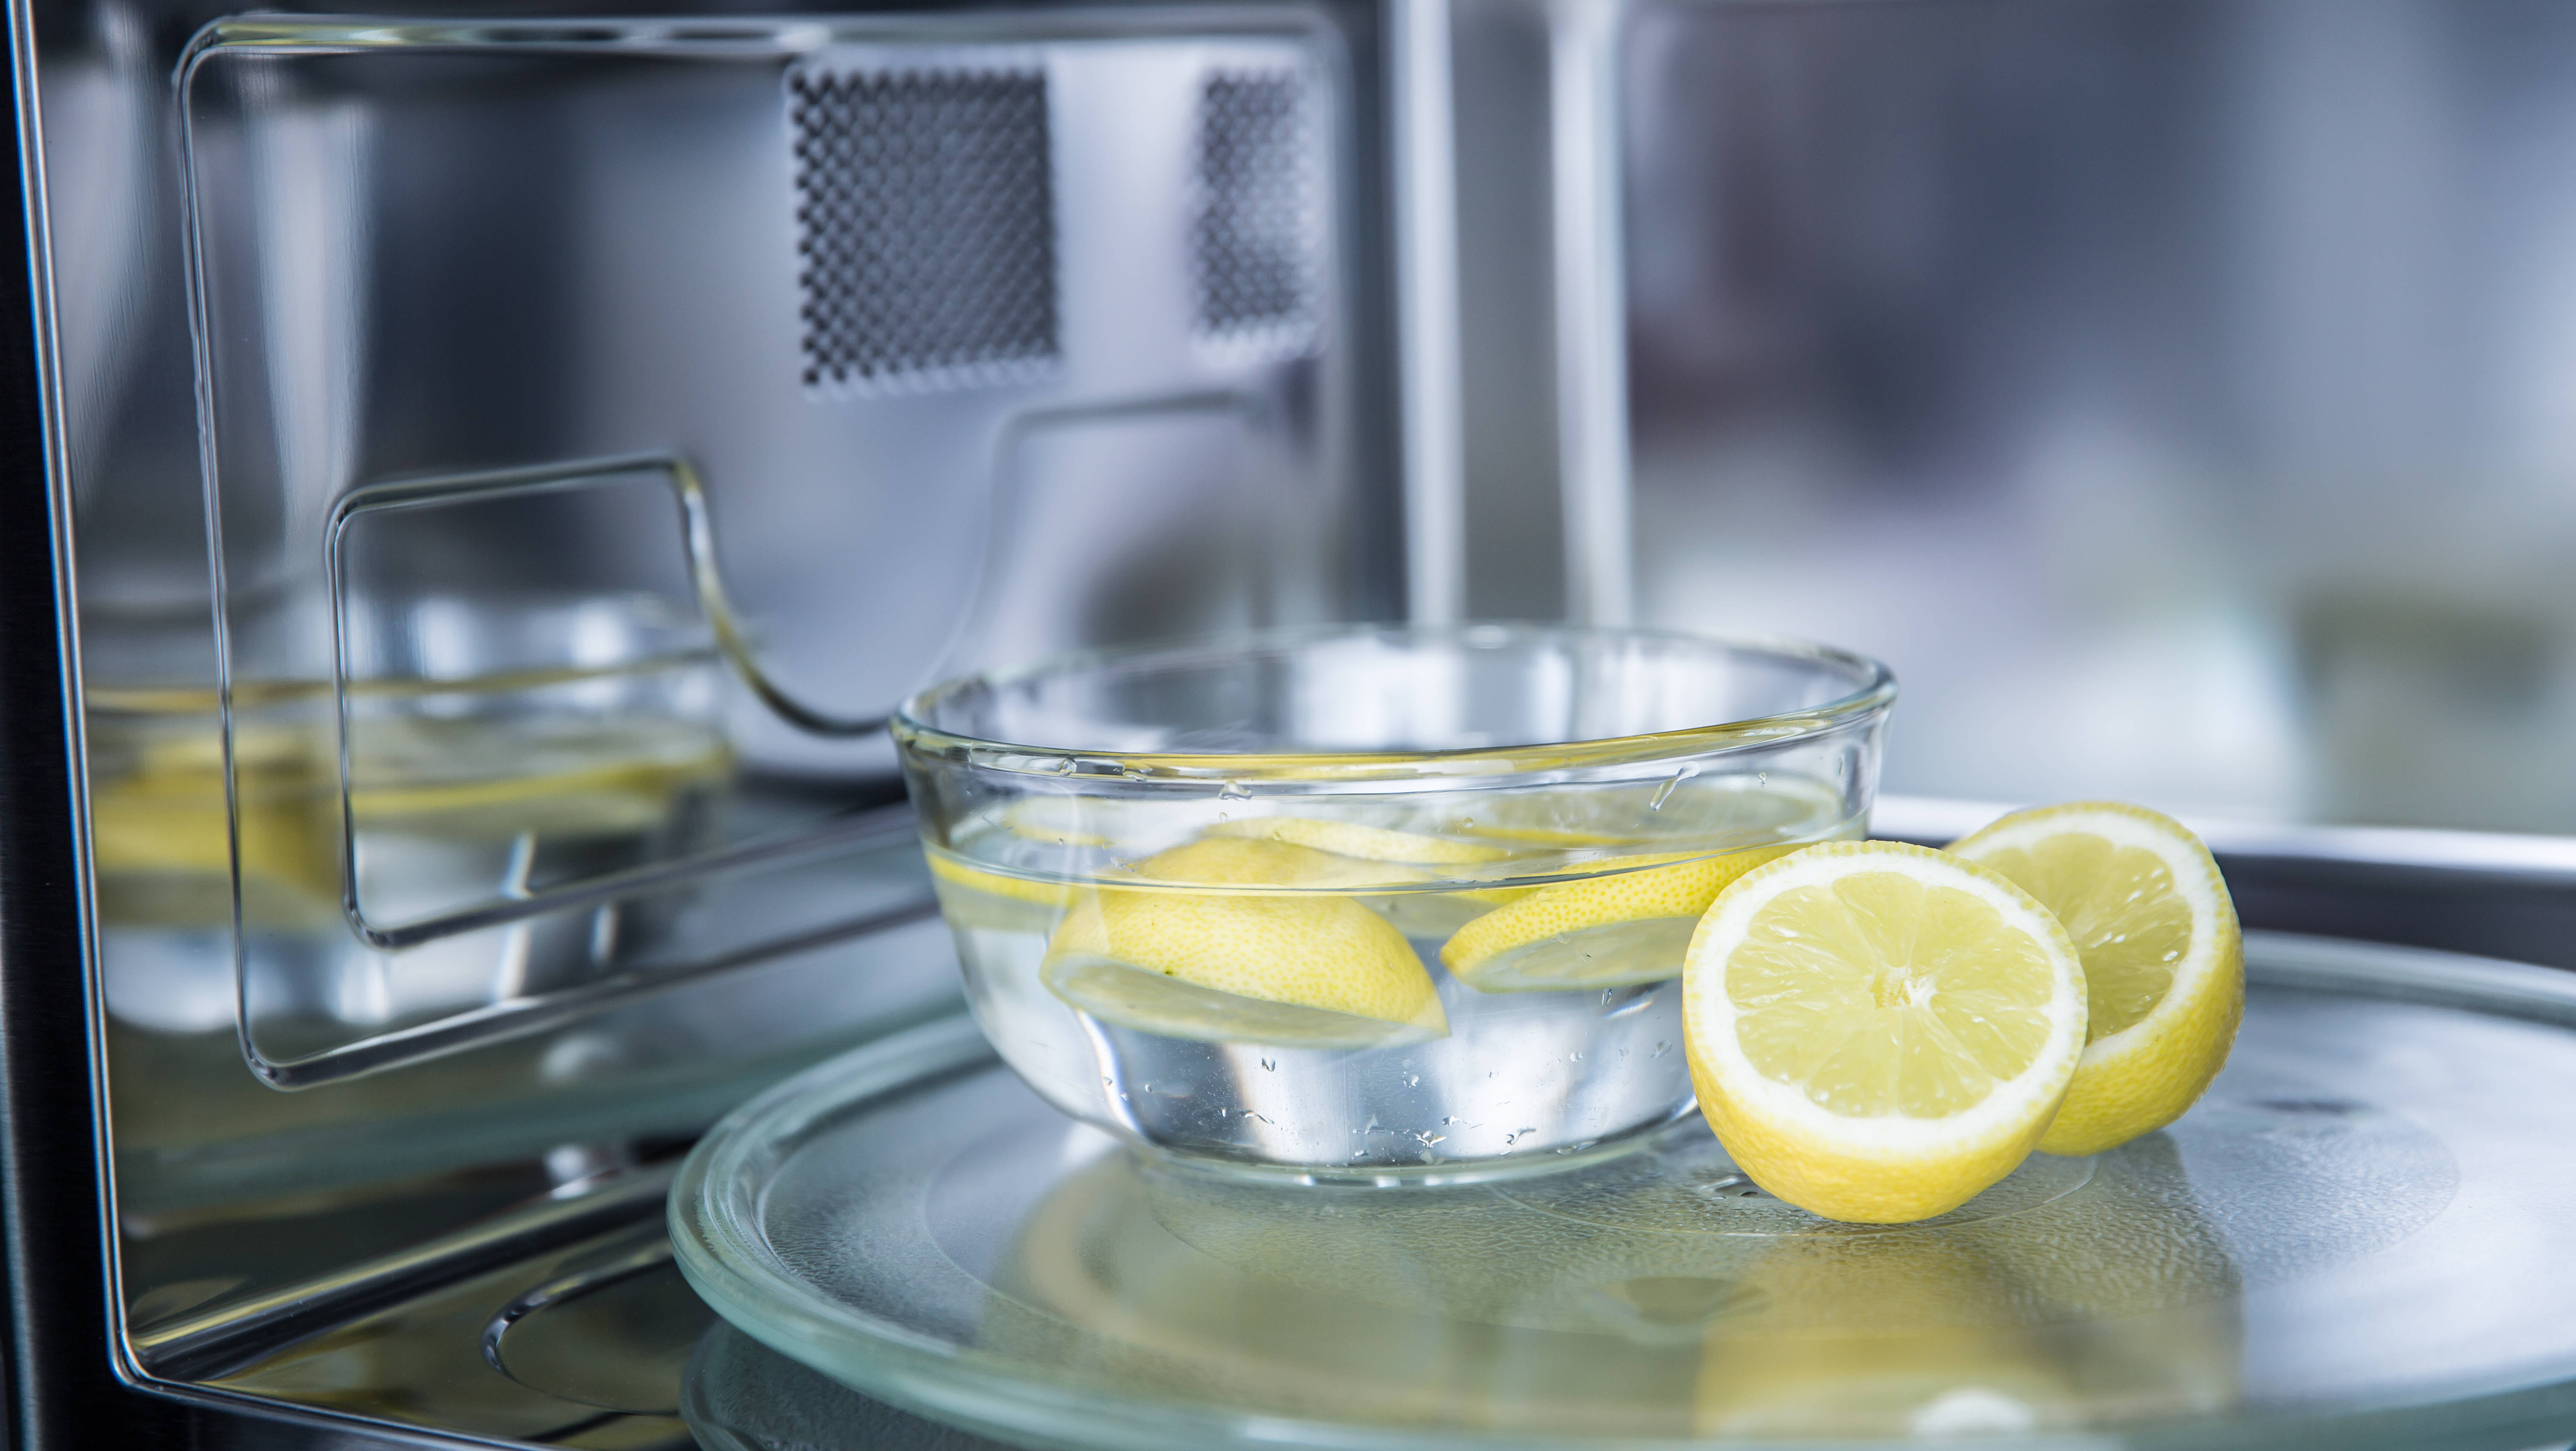 Slices of lemon in water inside a microwave